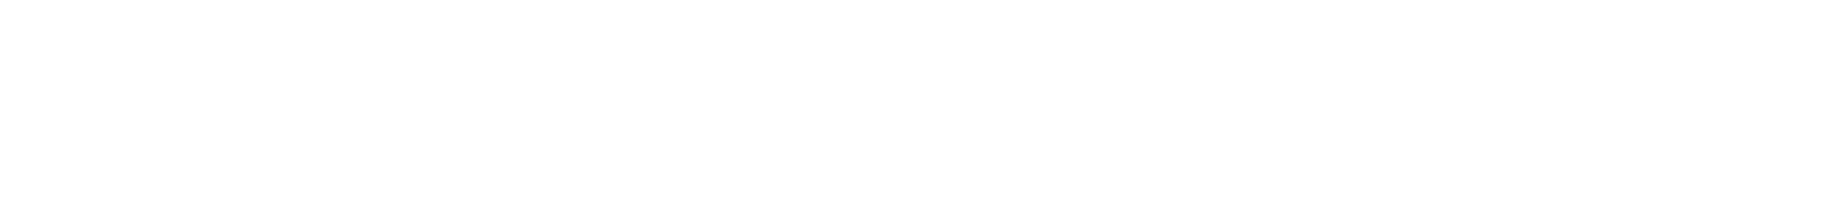 Gilles Mihalcean exhibition logo